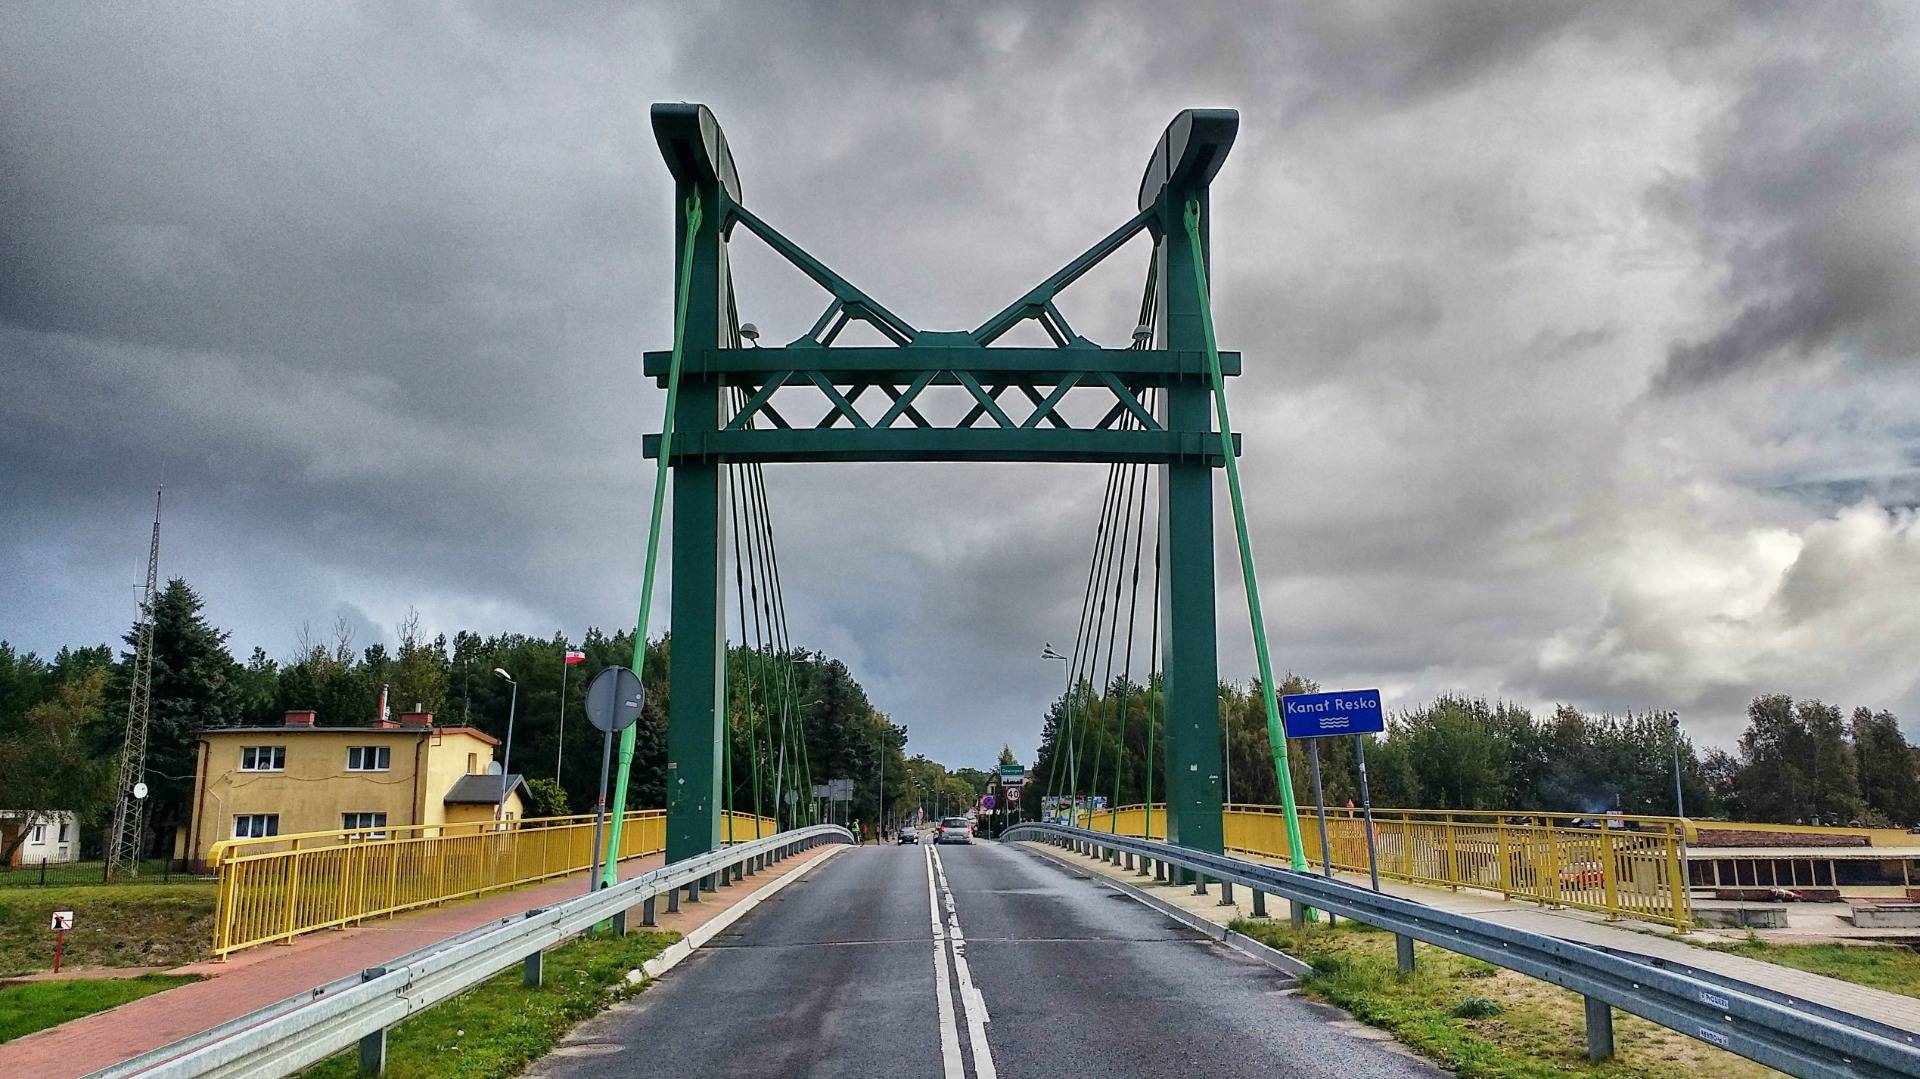 Darlowos Green Gate bridge